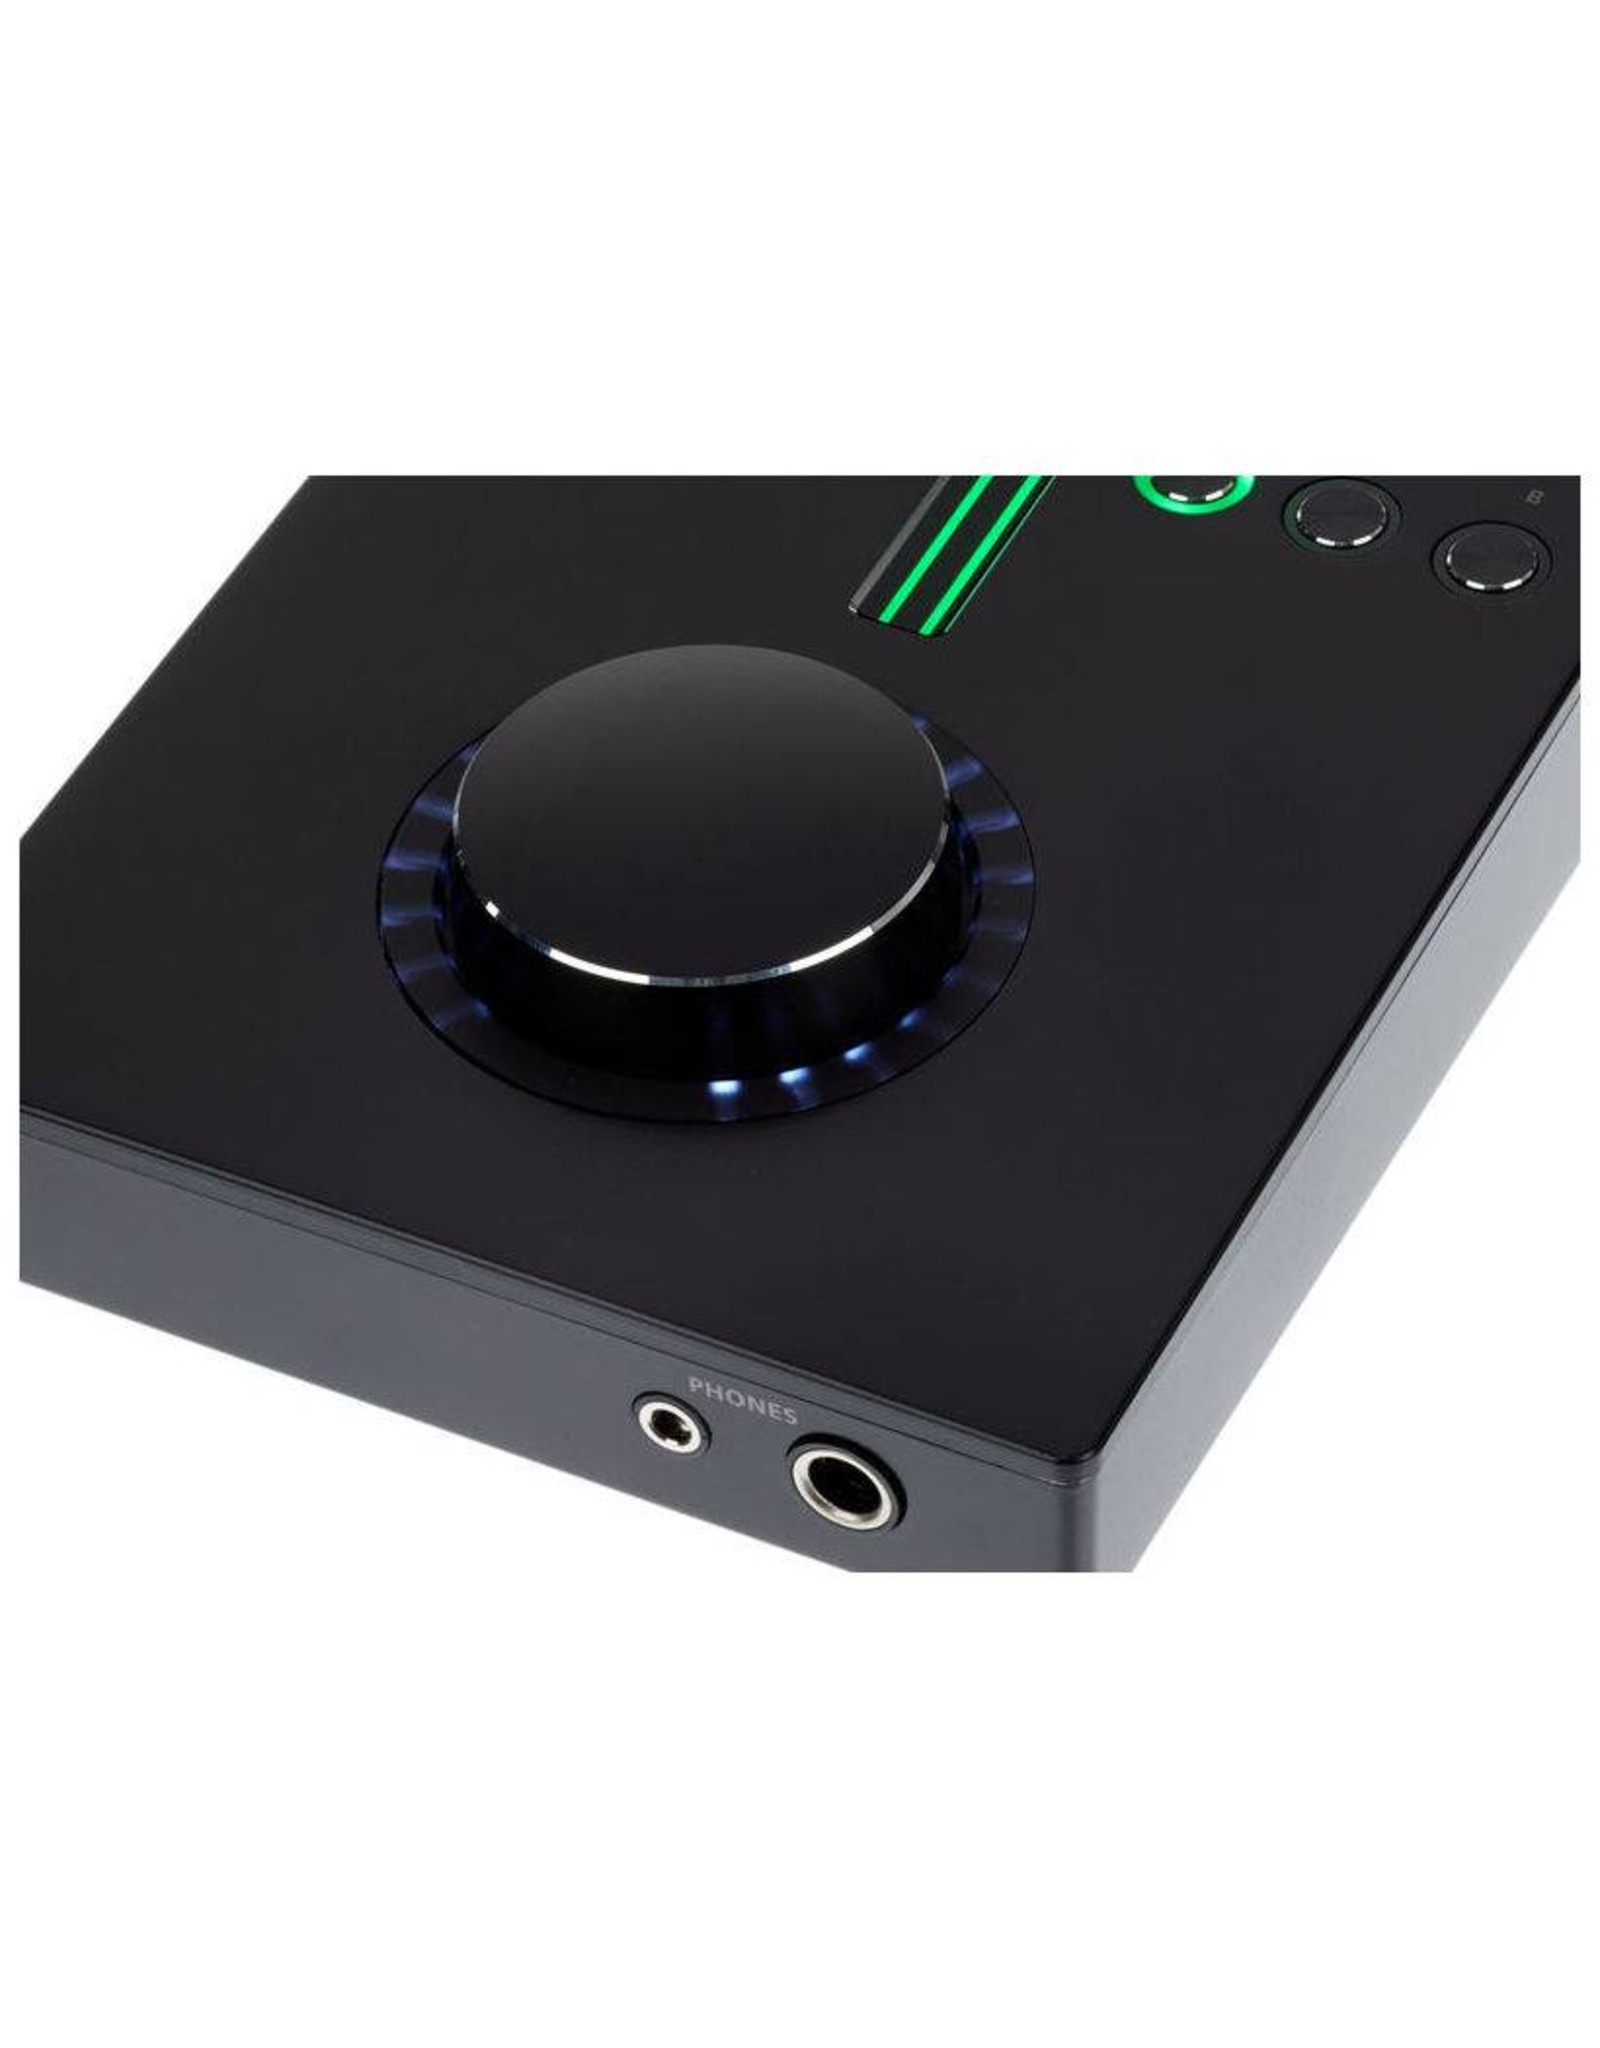 Roland  UA-S10 audio interface for PC & Mac superb audio quality